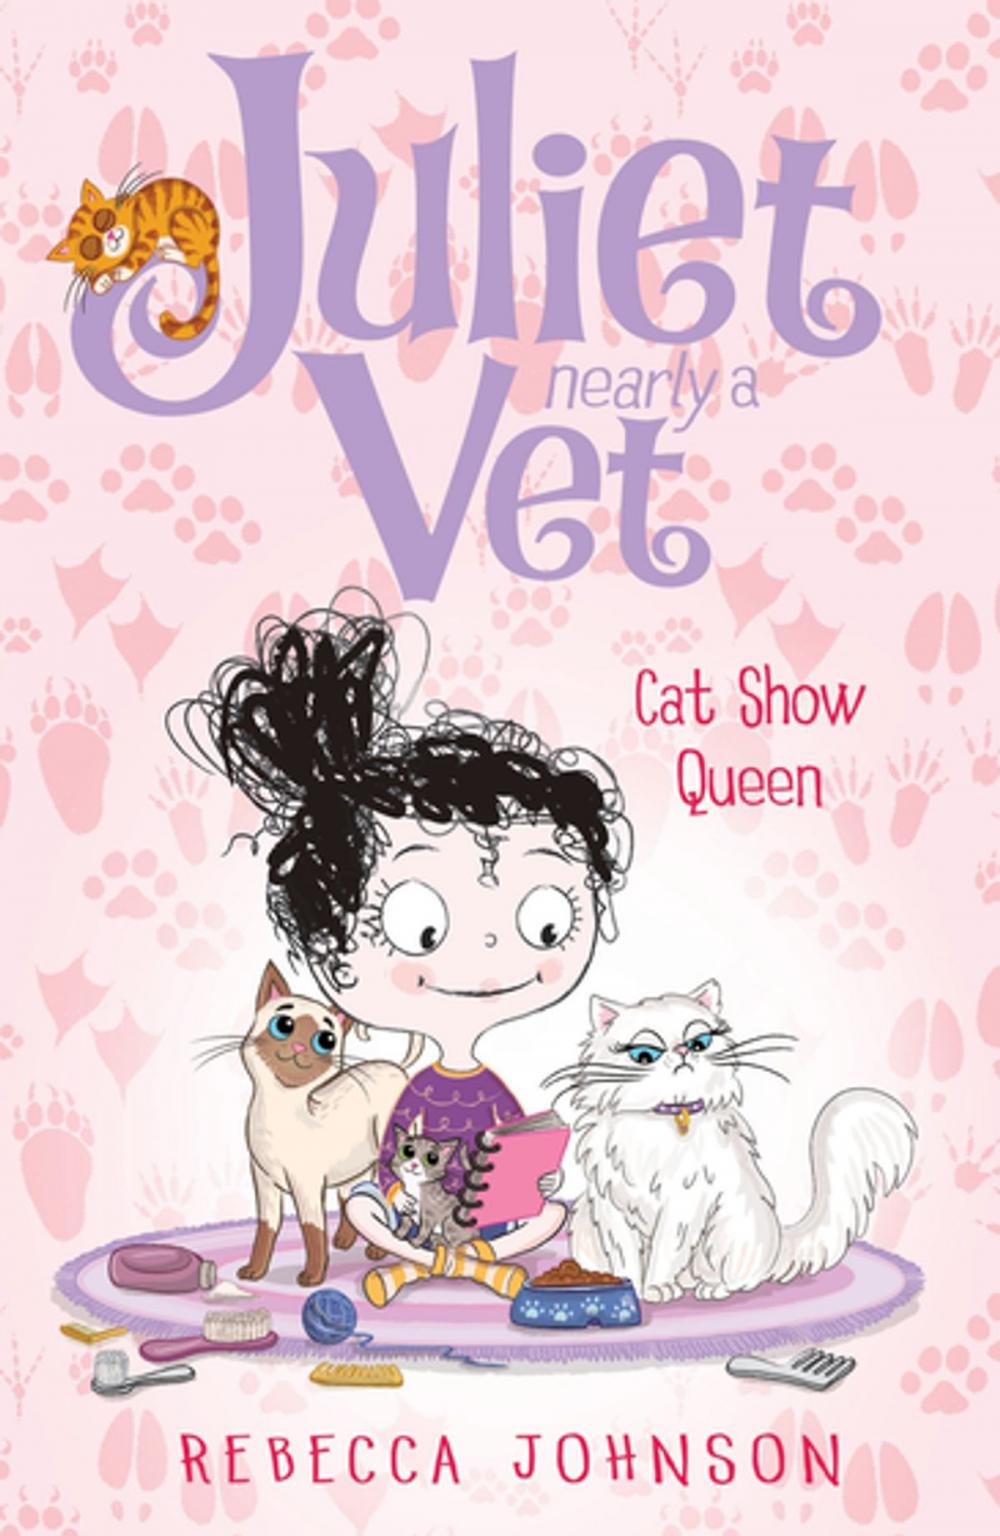 Big bigCover of Cat Show Queen: Juliet, Nearly a Vet (Book 10)